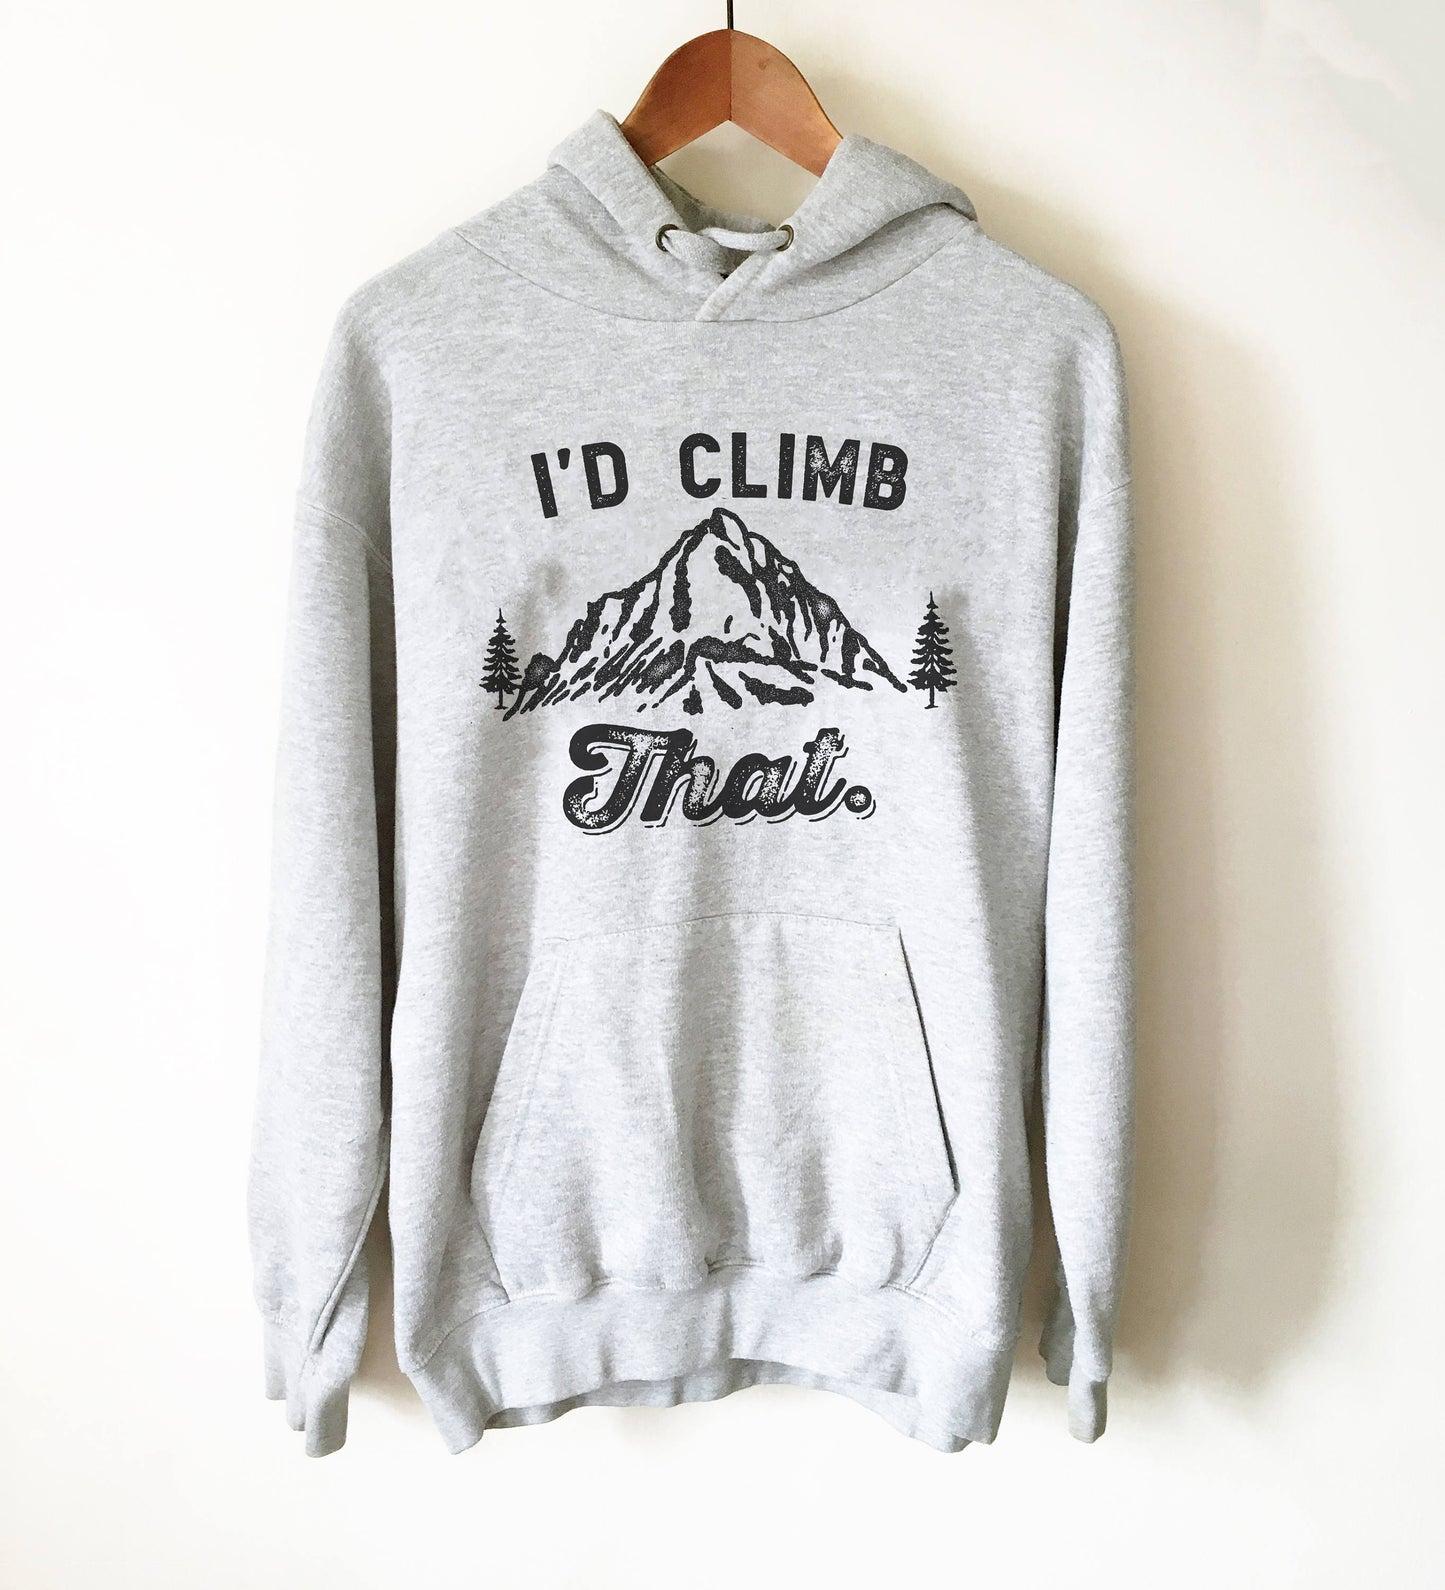 I'd Climb That Hoodie - Climbing shirt | Rock climbing shirt | Mountain climbing | Hiking Shirts women | Mountain shirt |